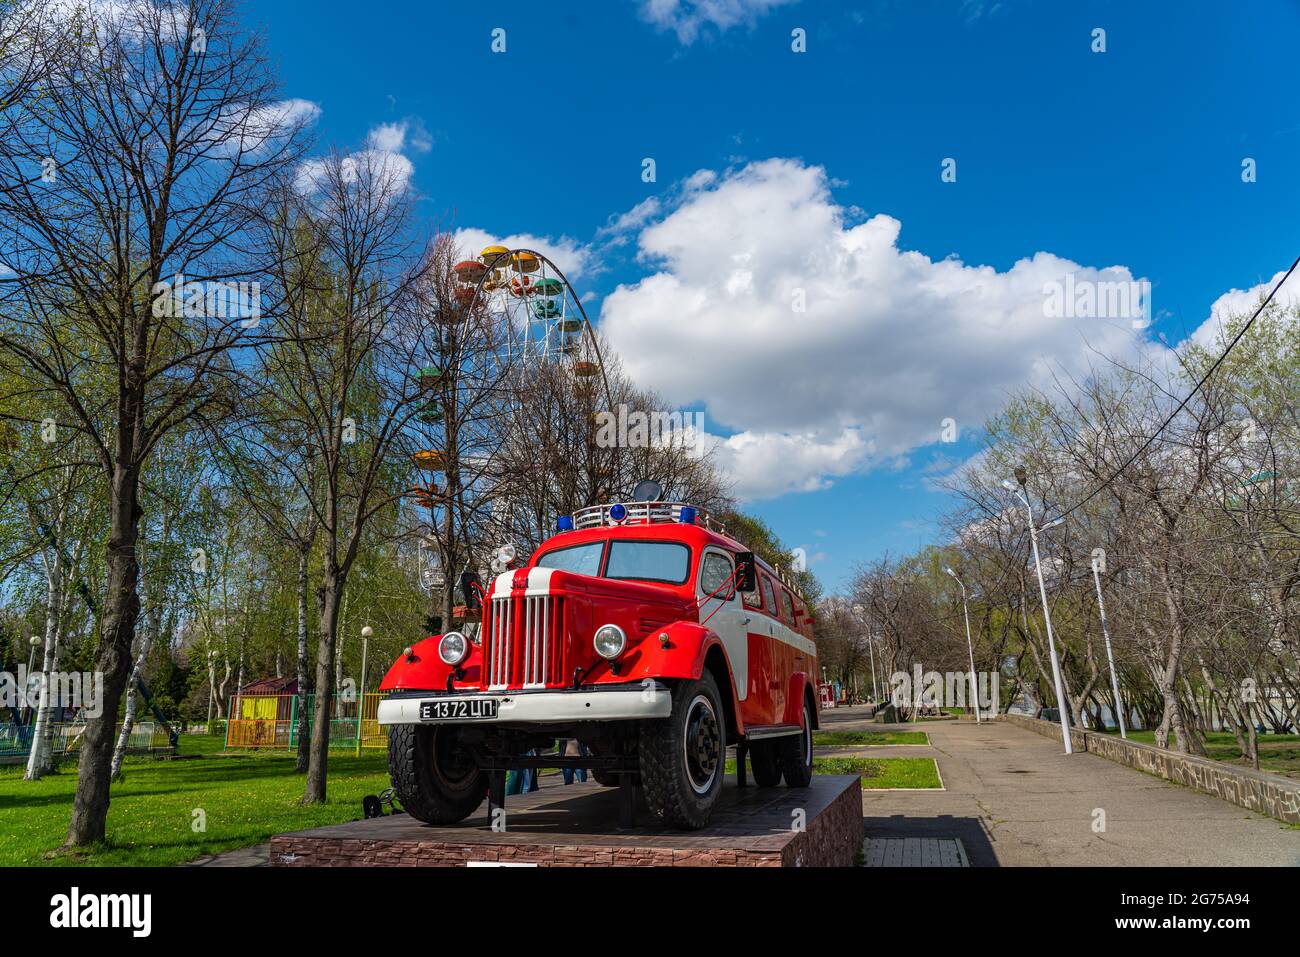 KRASNODAR - MAY 21, 2021: Fire Car Zil from Soviet time, Fire Engine Retro Soviet Car Oldtimer at Krasnodar, background blue cloudy sky Stock Photo